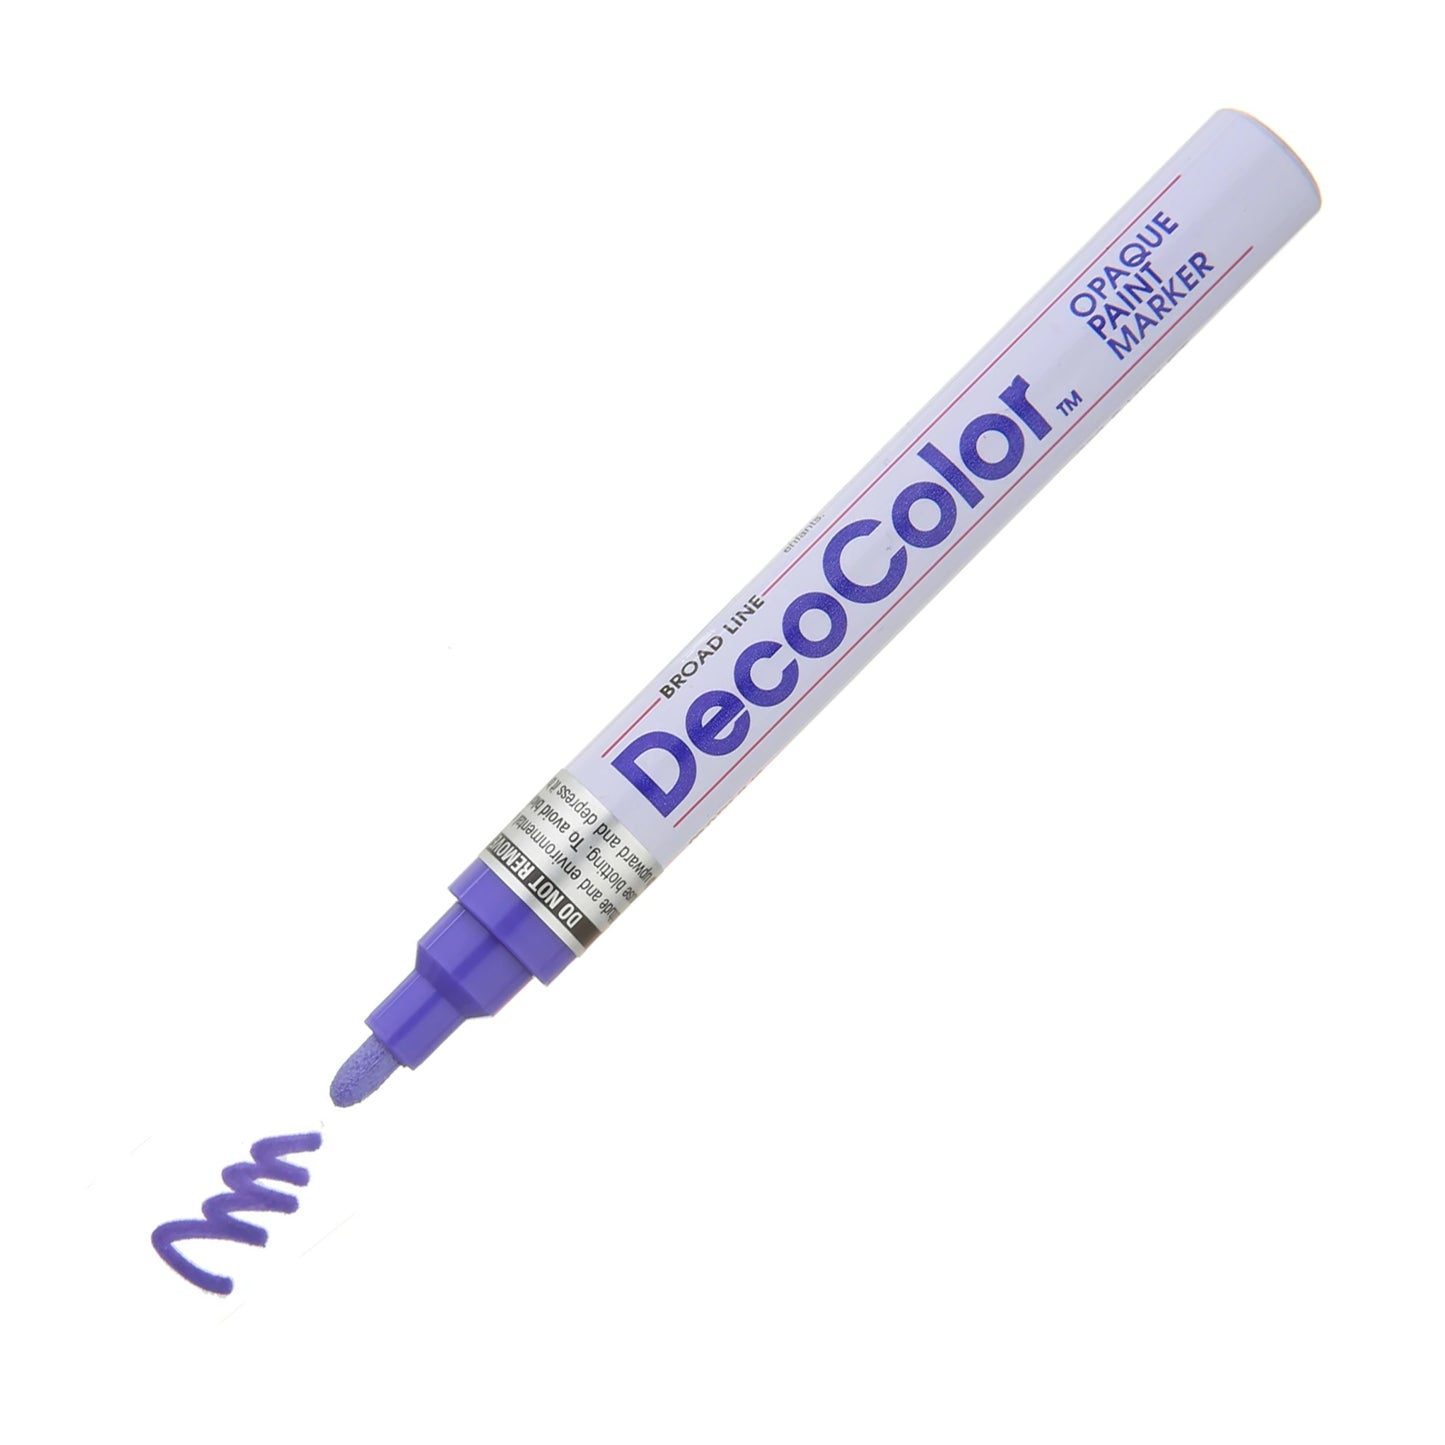 Pennarello a vernice Decocolor, punta tonda larga 6 mm